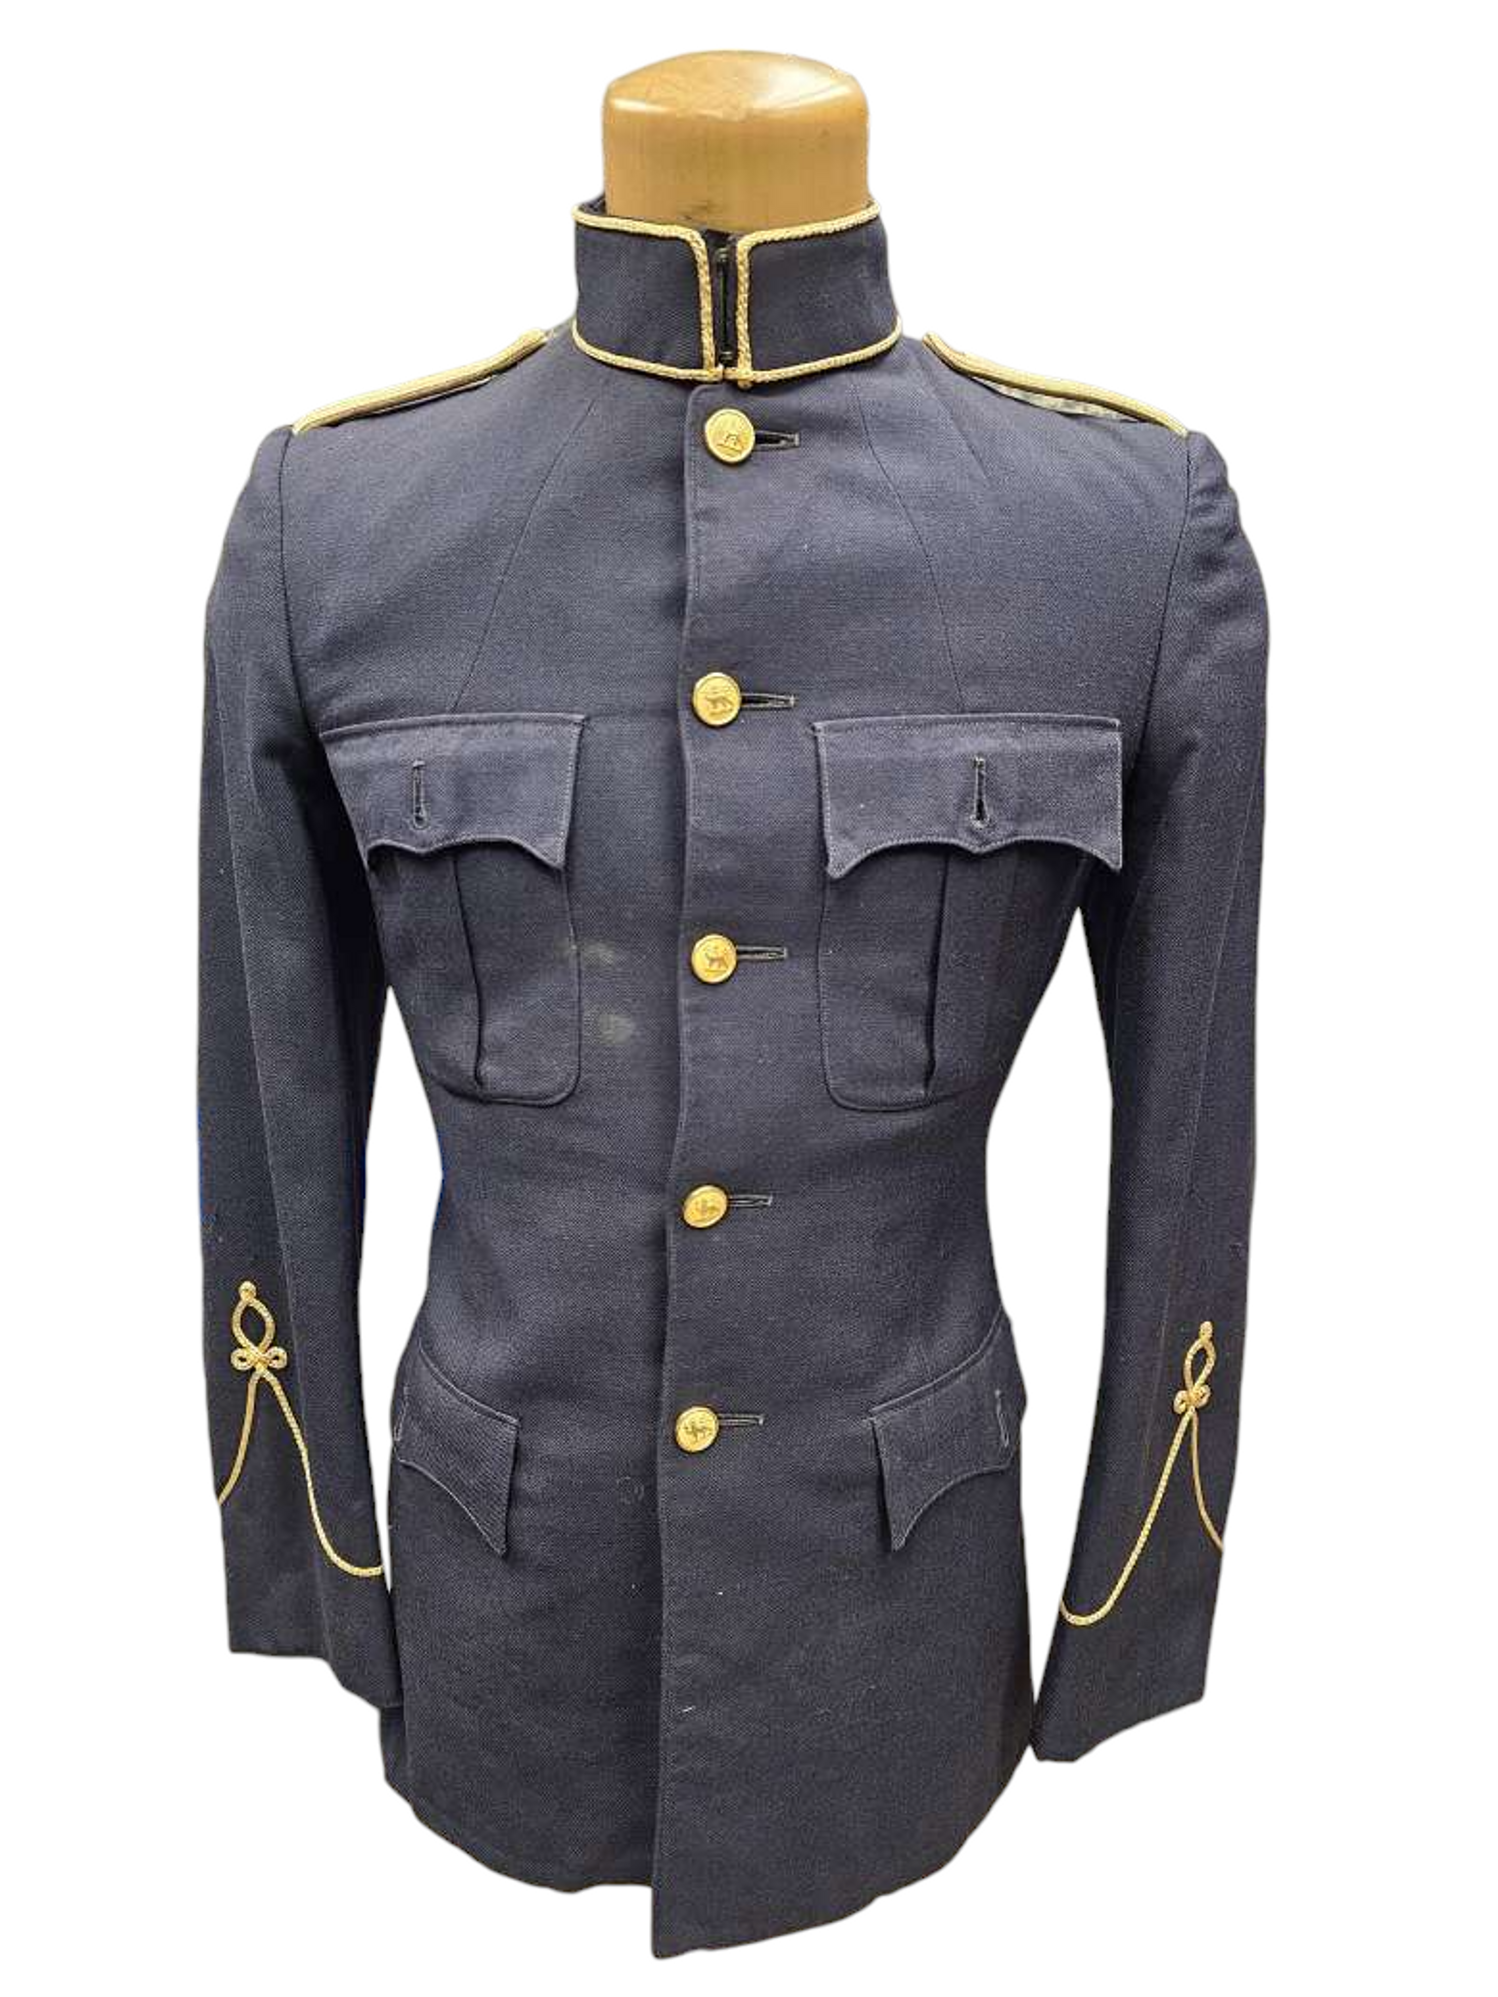 Canadian Armed Forces Blue Dress Uniform Jacket